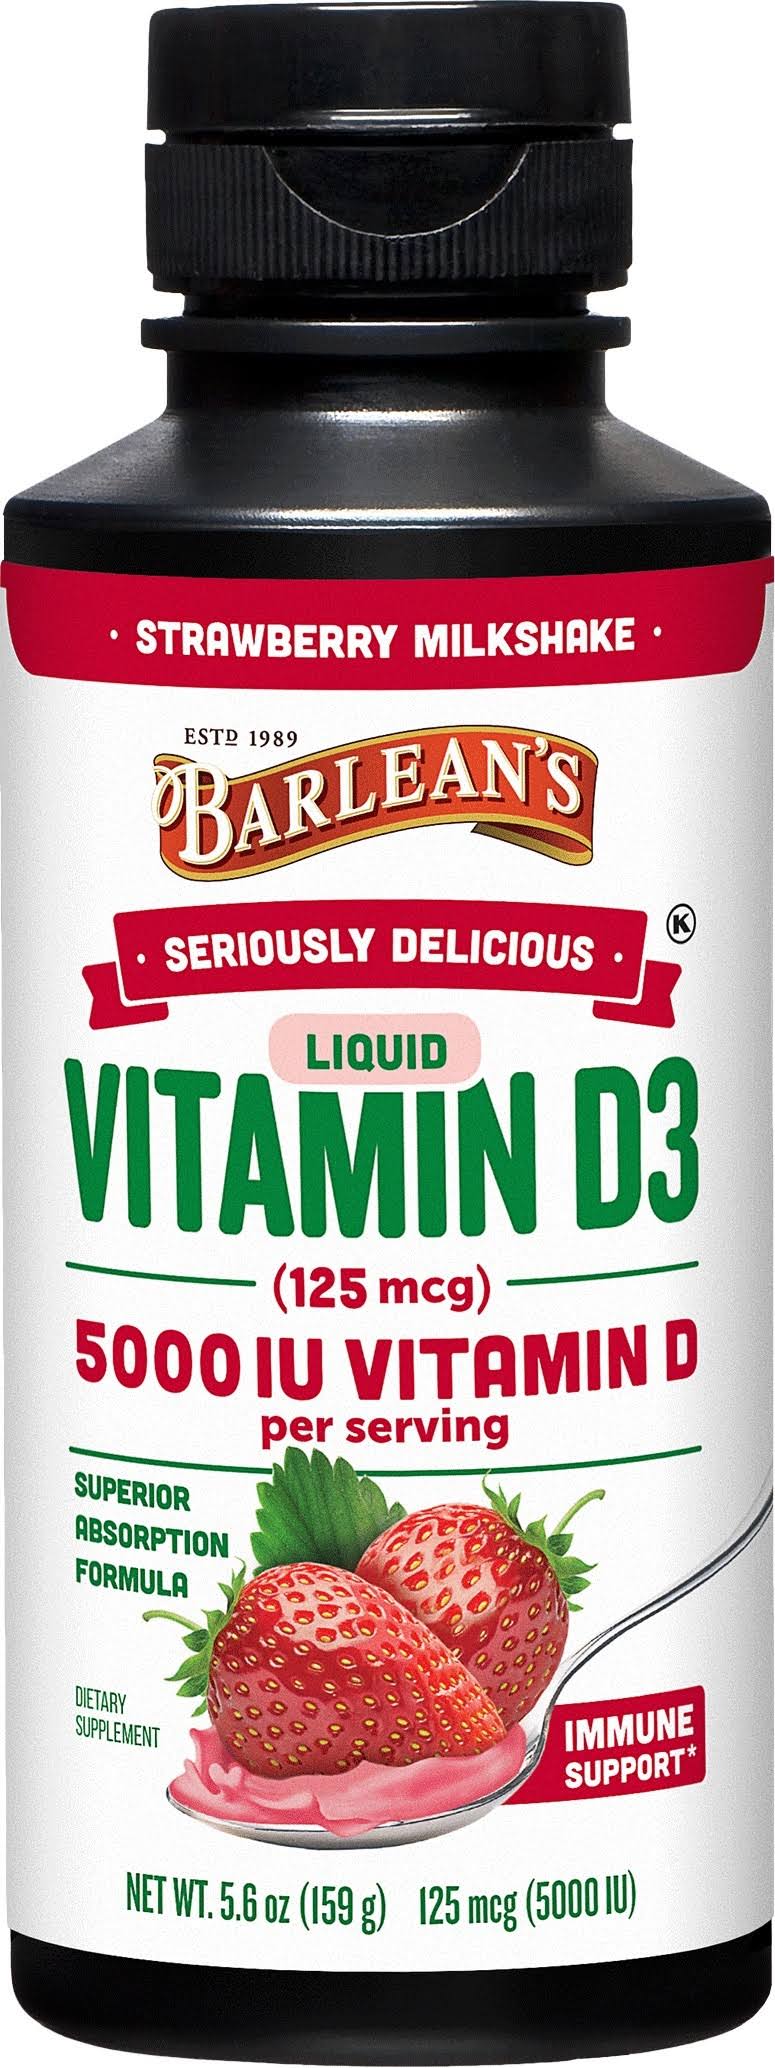 Barlean's Seriously Delicious Liquid Vitamin D3 Strawberry Milkshake 125 mcg (5000 IU) 5.6 oz (159 g)